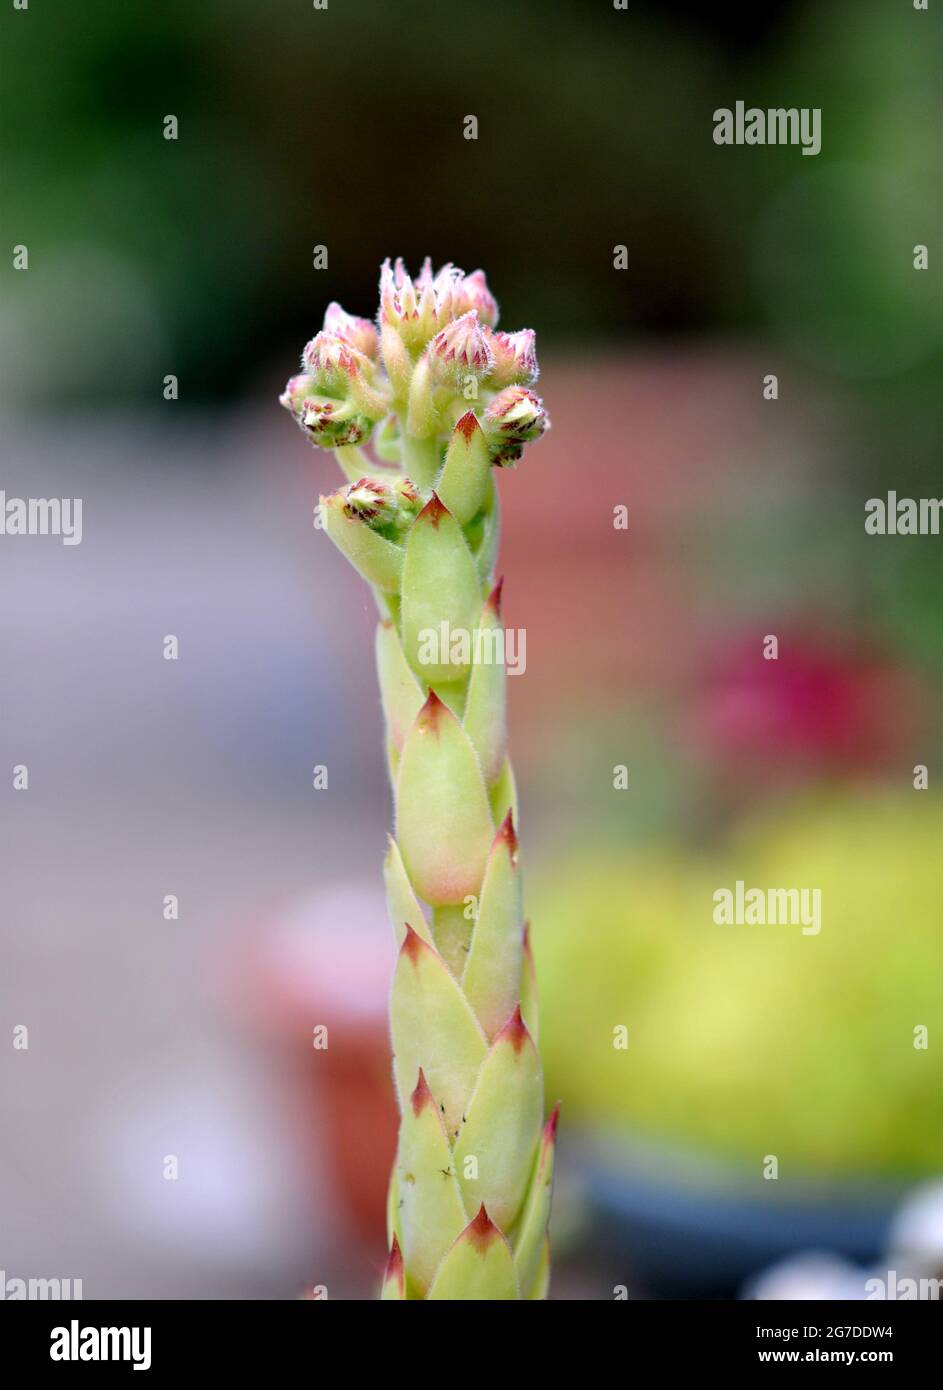 blooming sempervivum succulent plant image Stock Photo